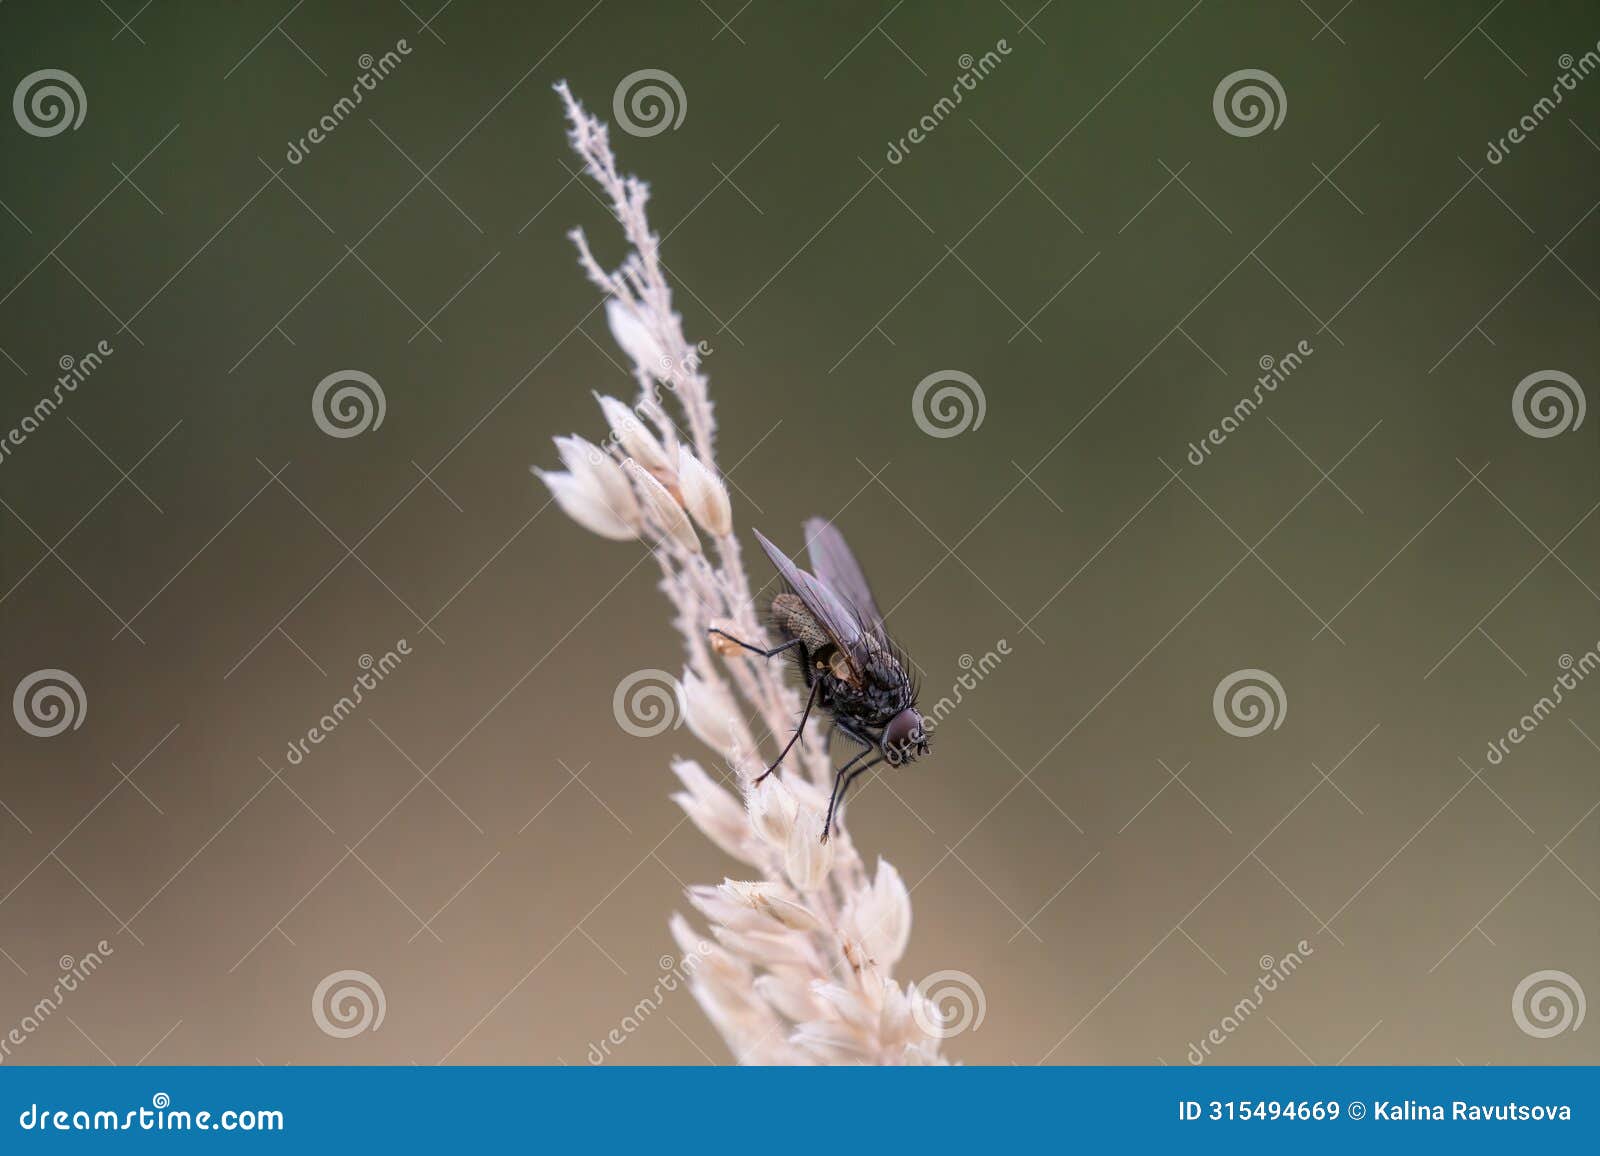 housefly (musca domestica)